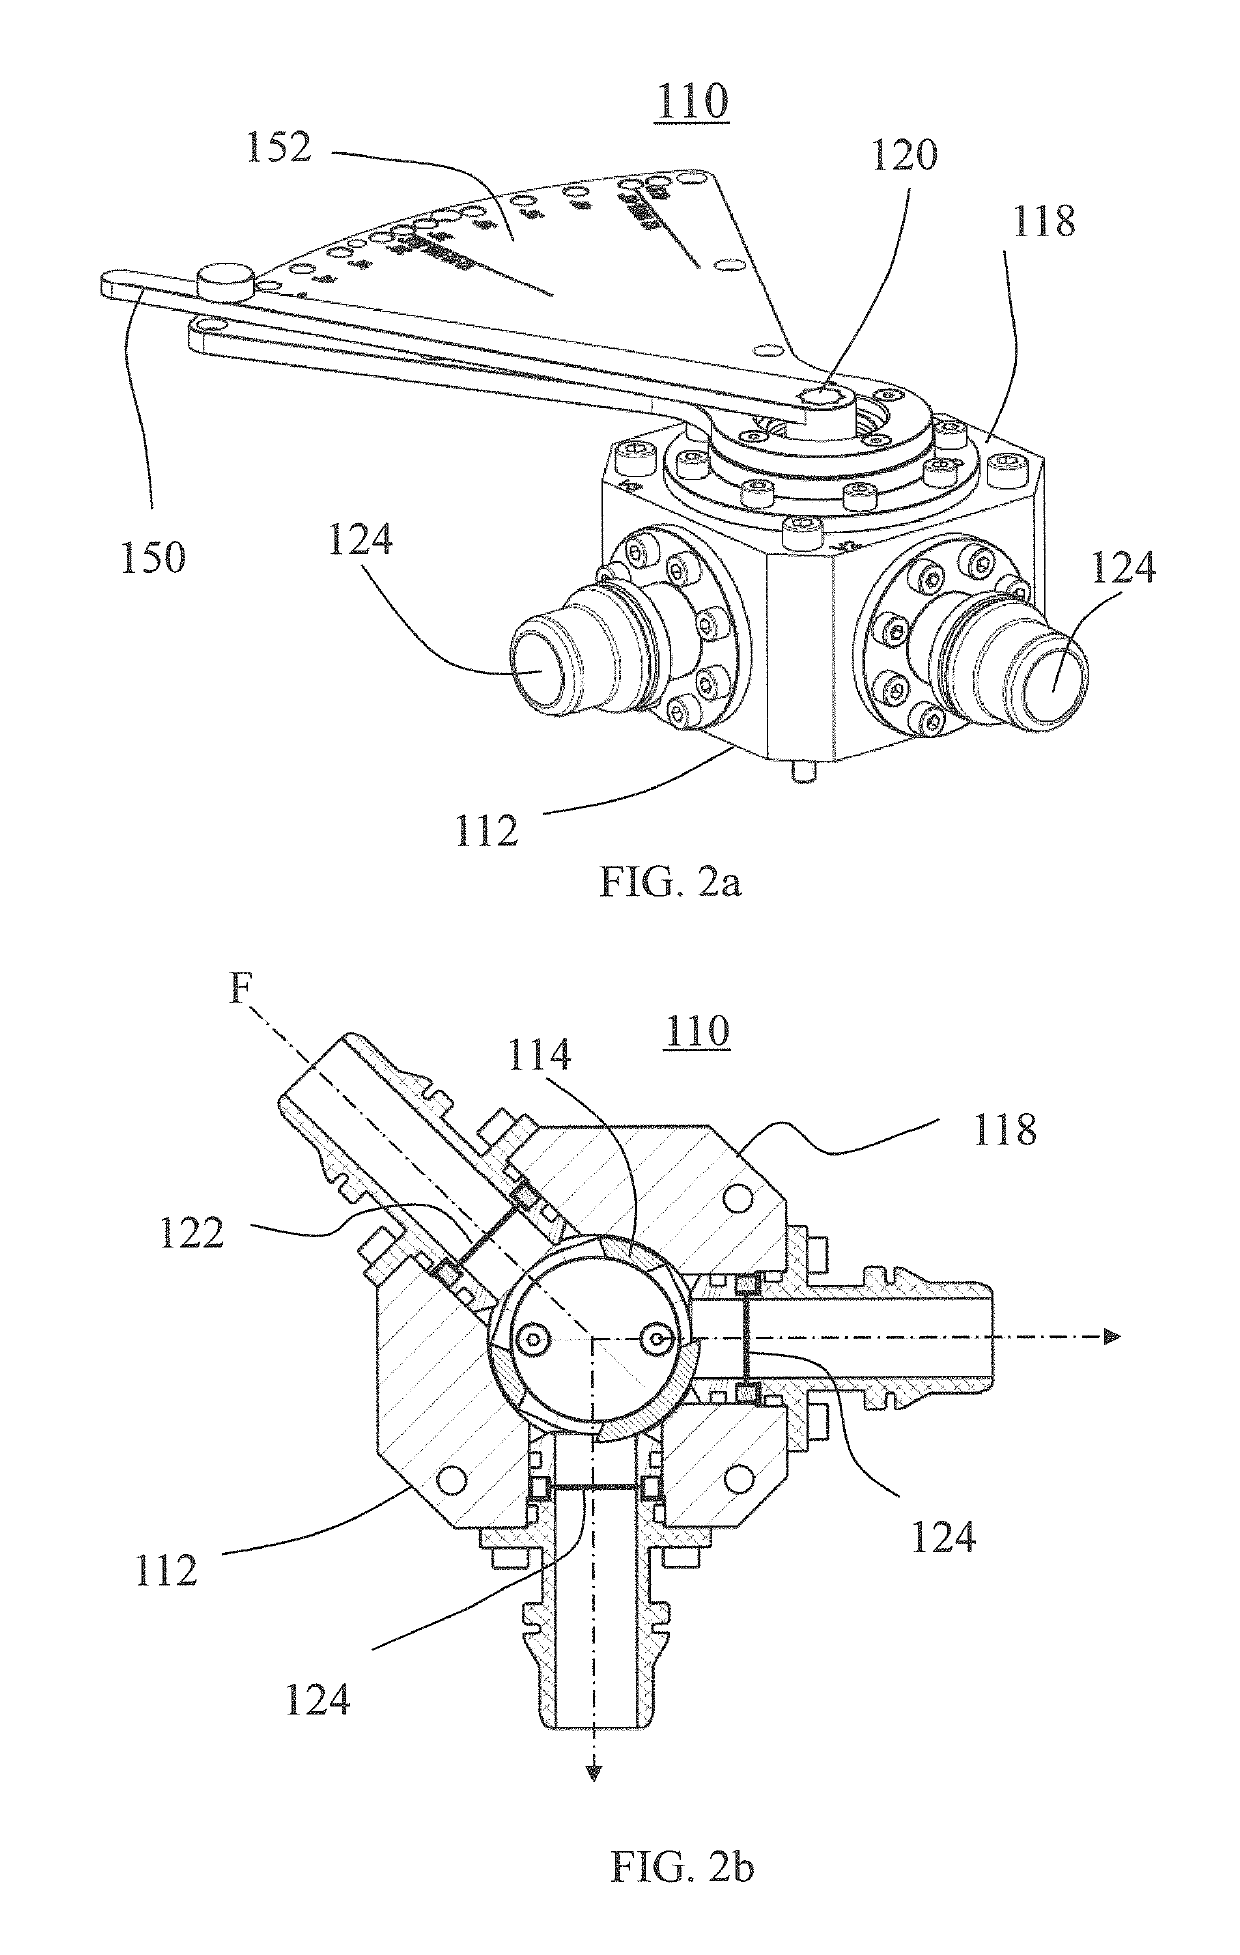 Ball valve apparatus